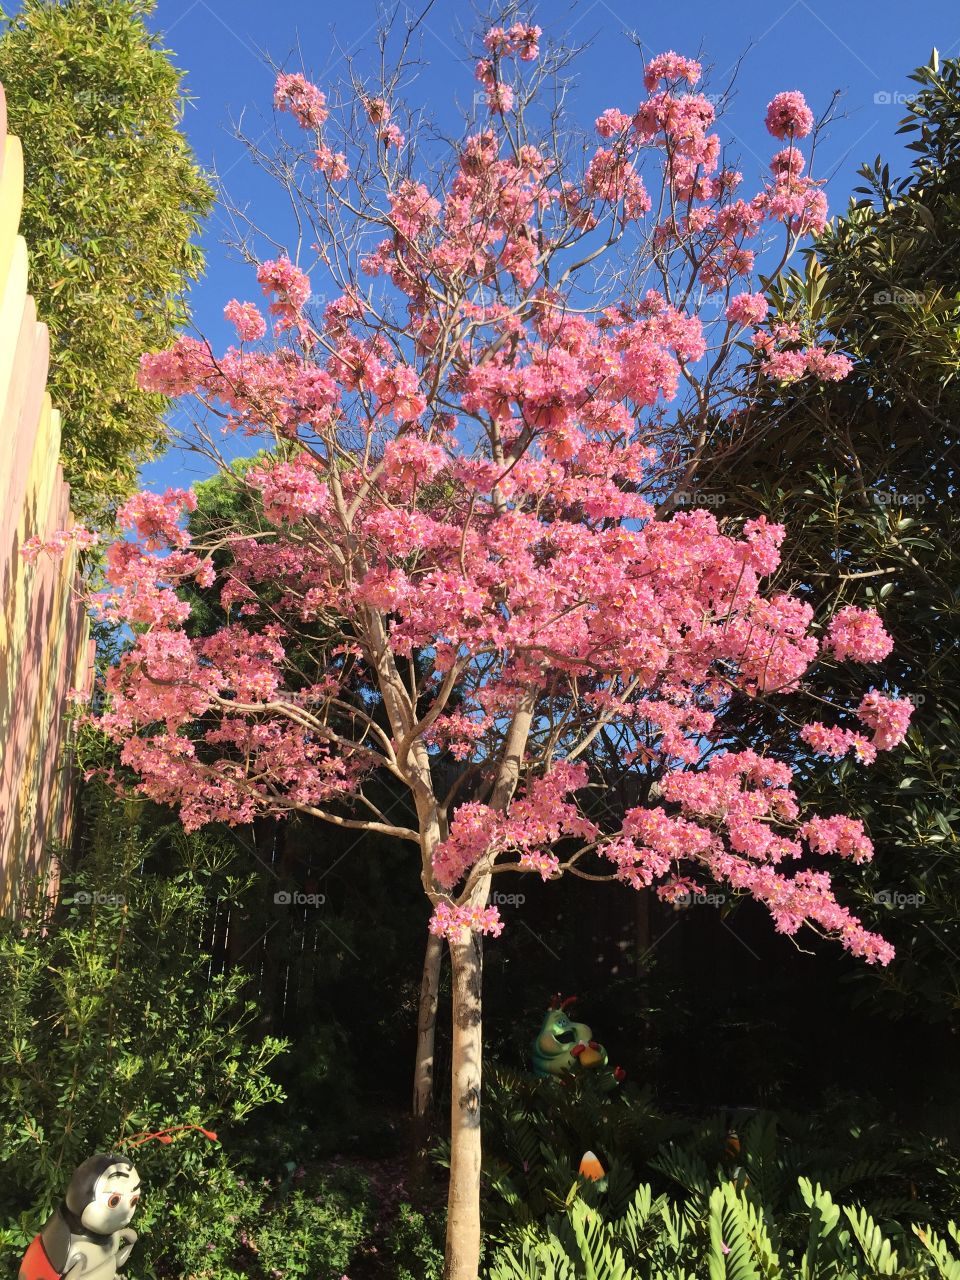 Disney Land has trees that bloom pink flowers. 